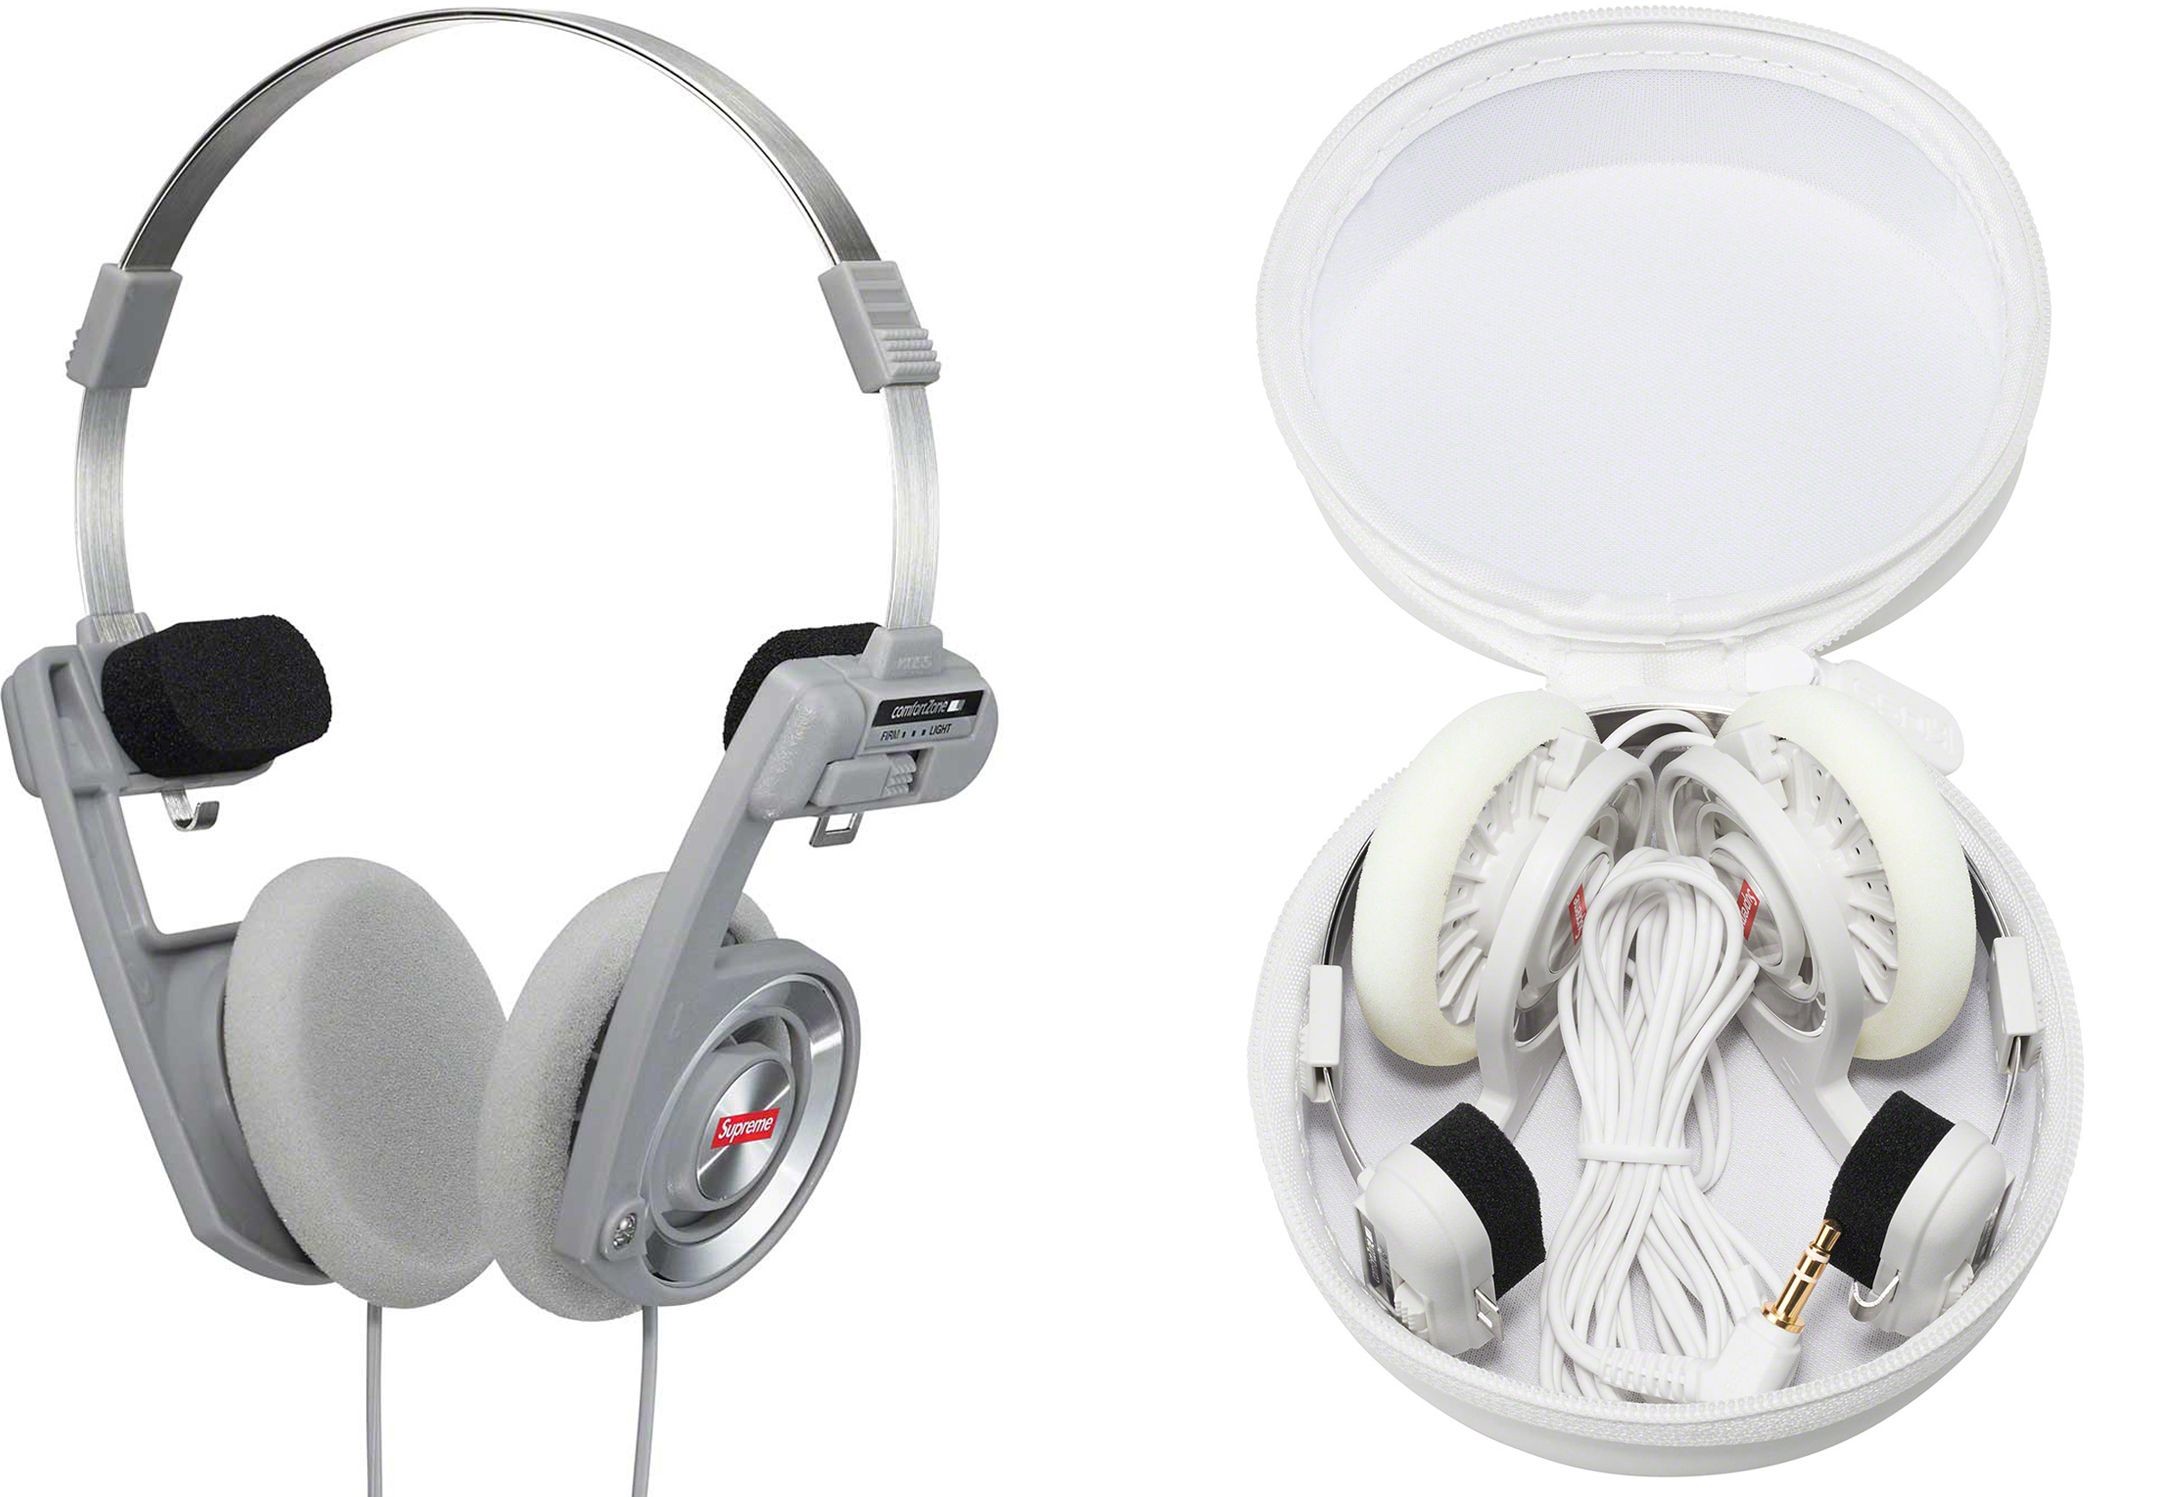 Supreme®/Koss PortaPro Headphones – Supreme